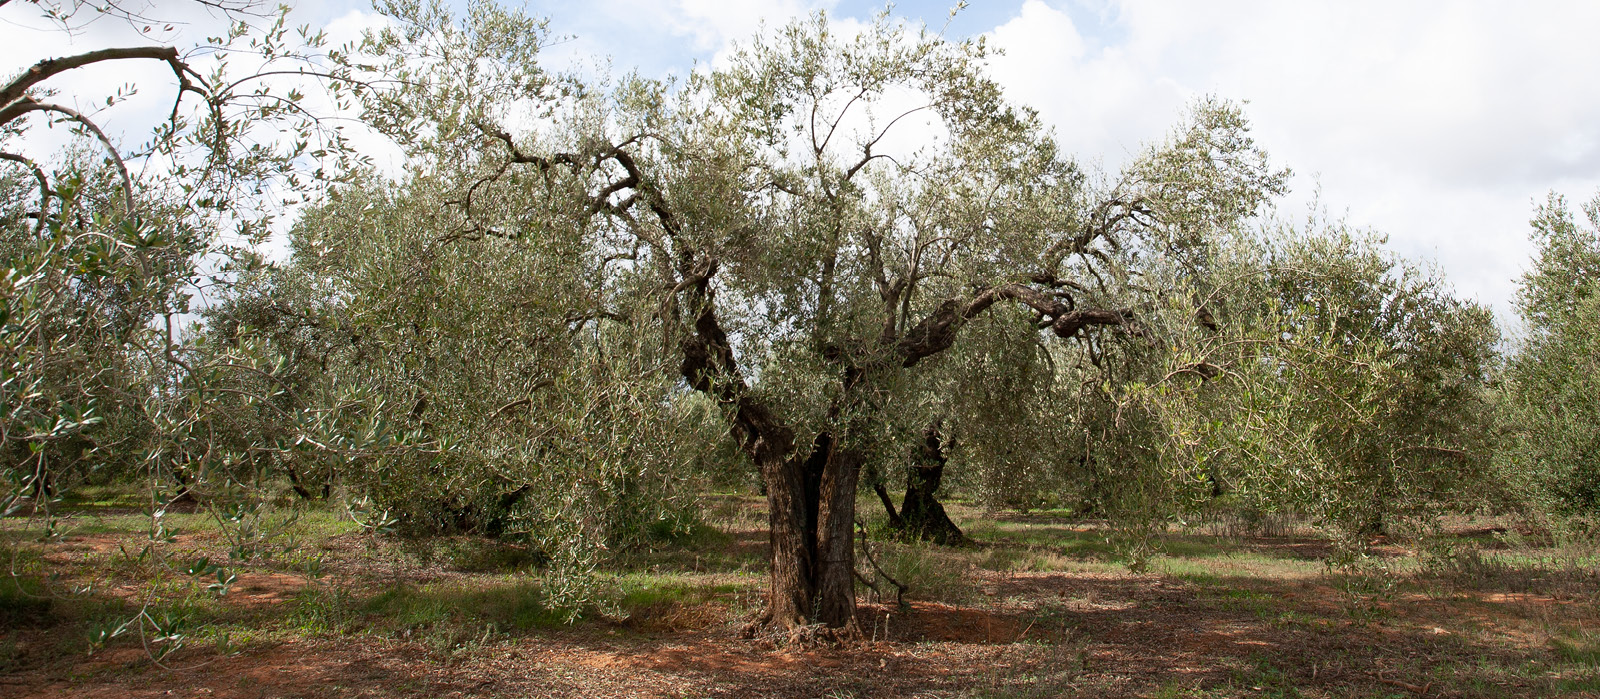 Isbilya El origen del olivo